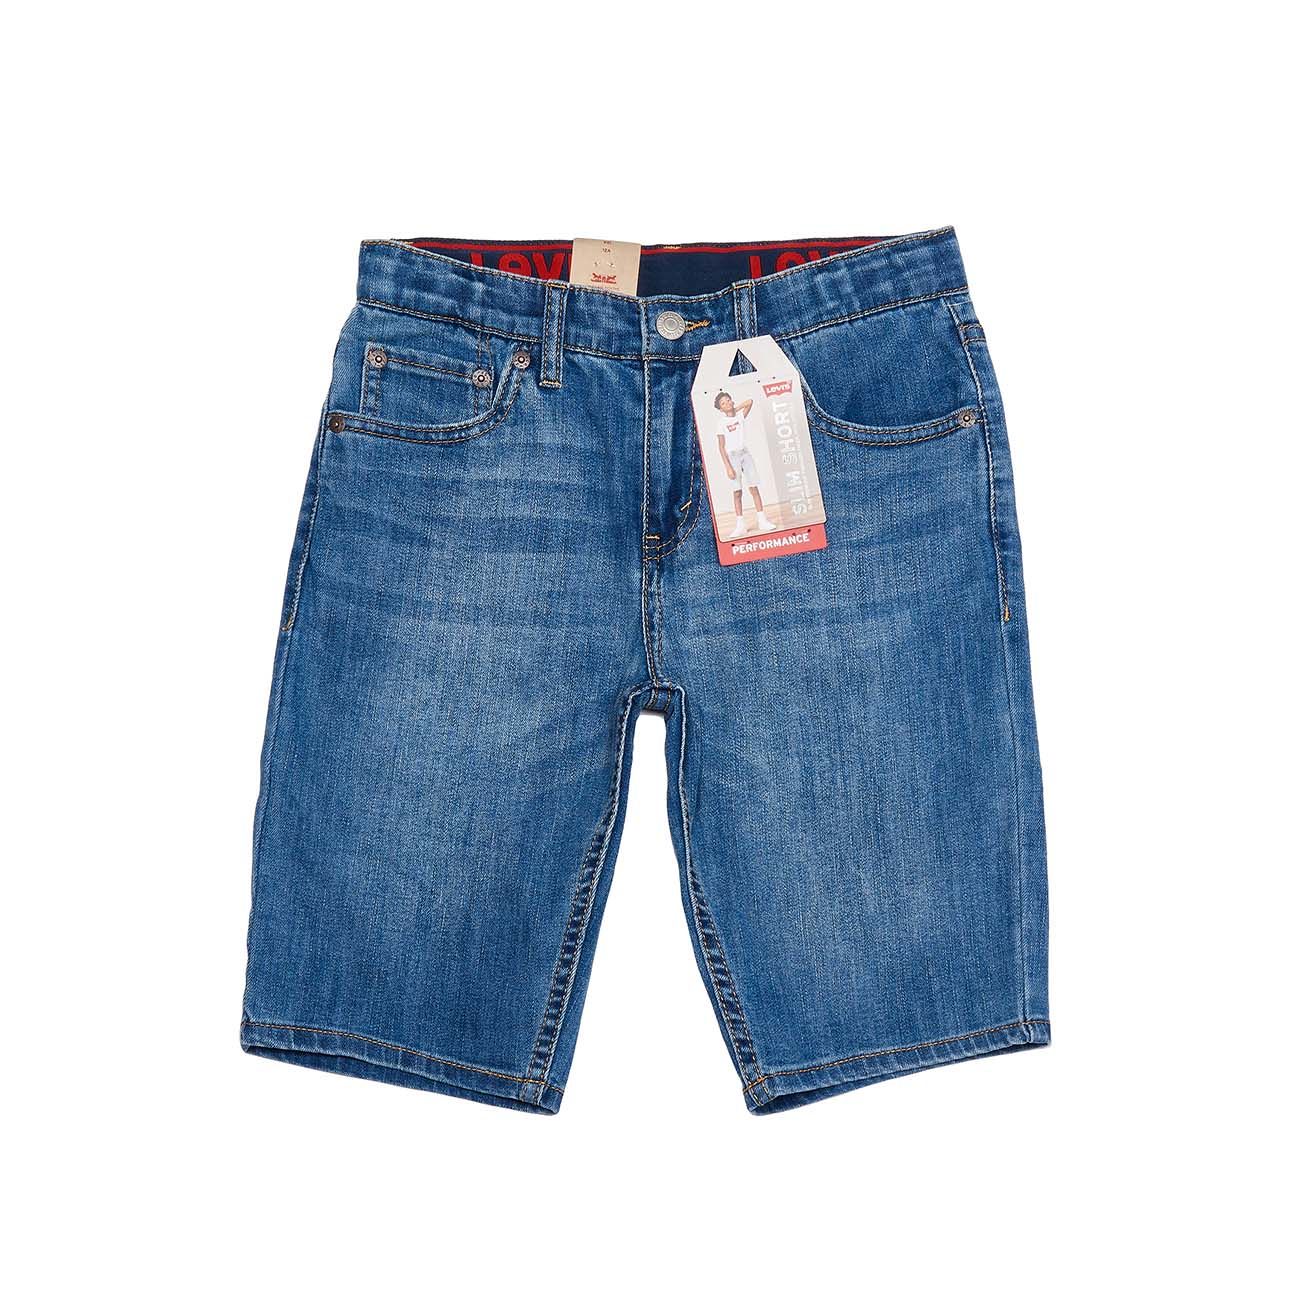 DTT slim fit denim shorts in light blue | ASOS